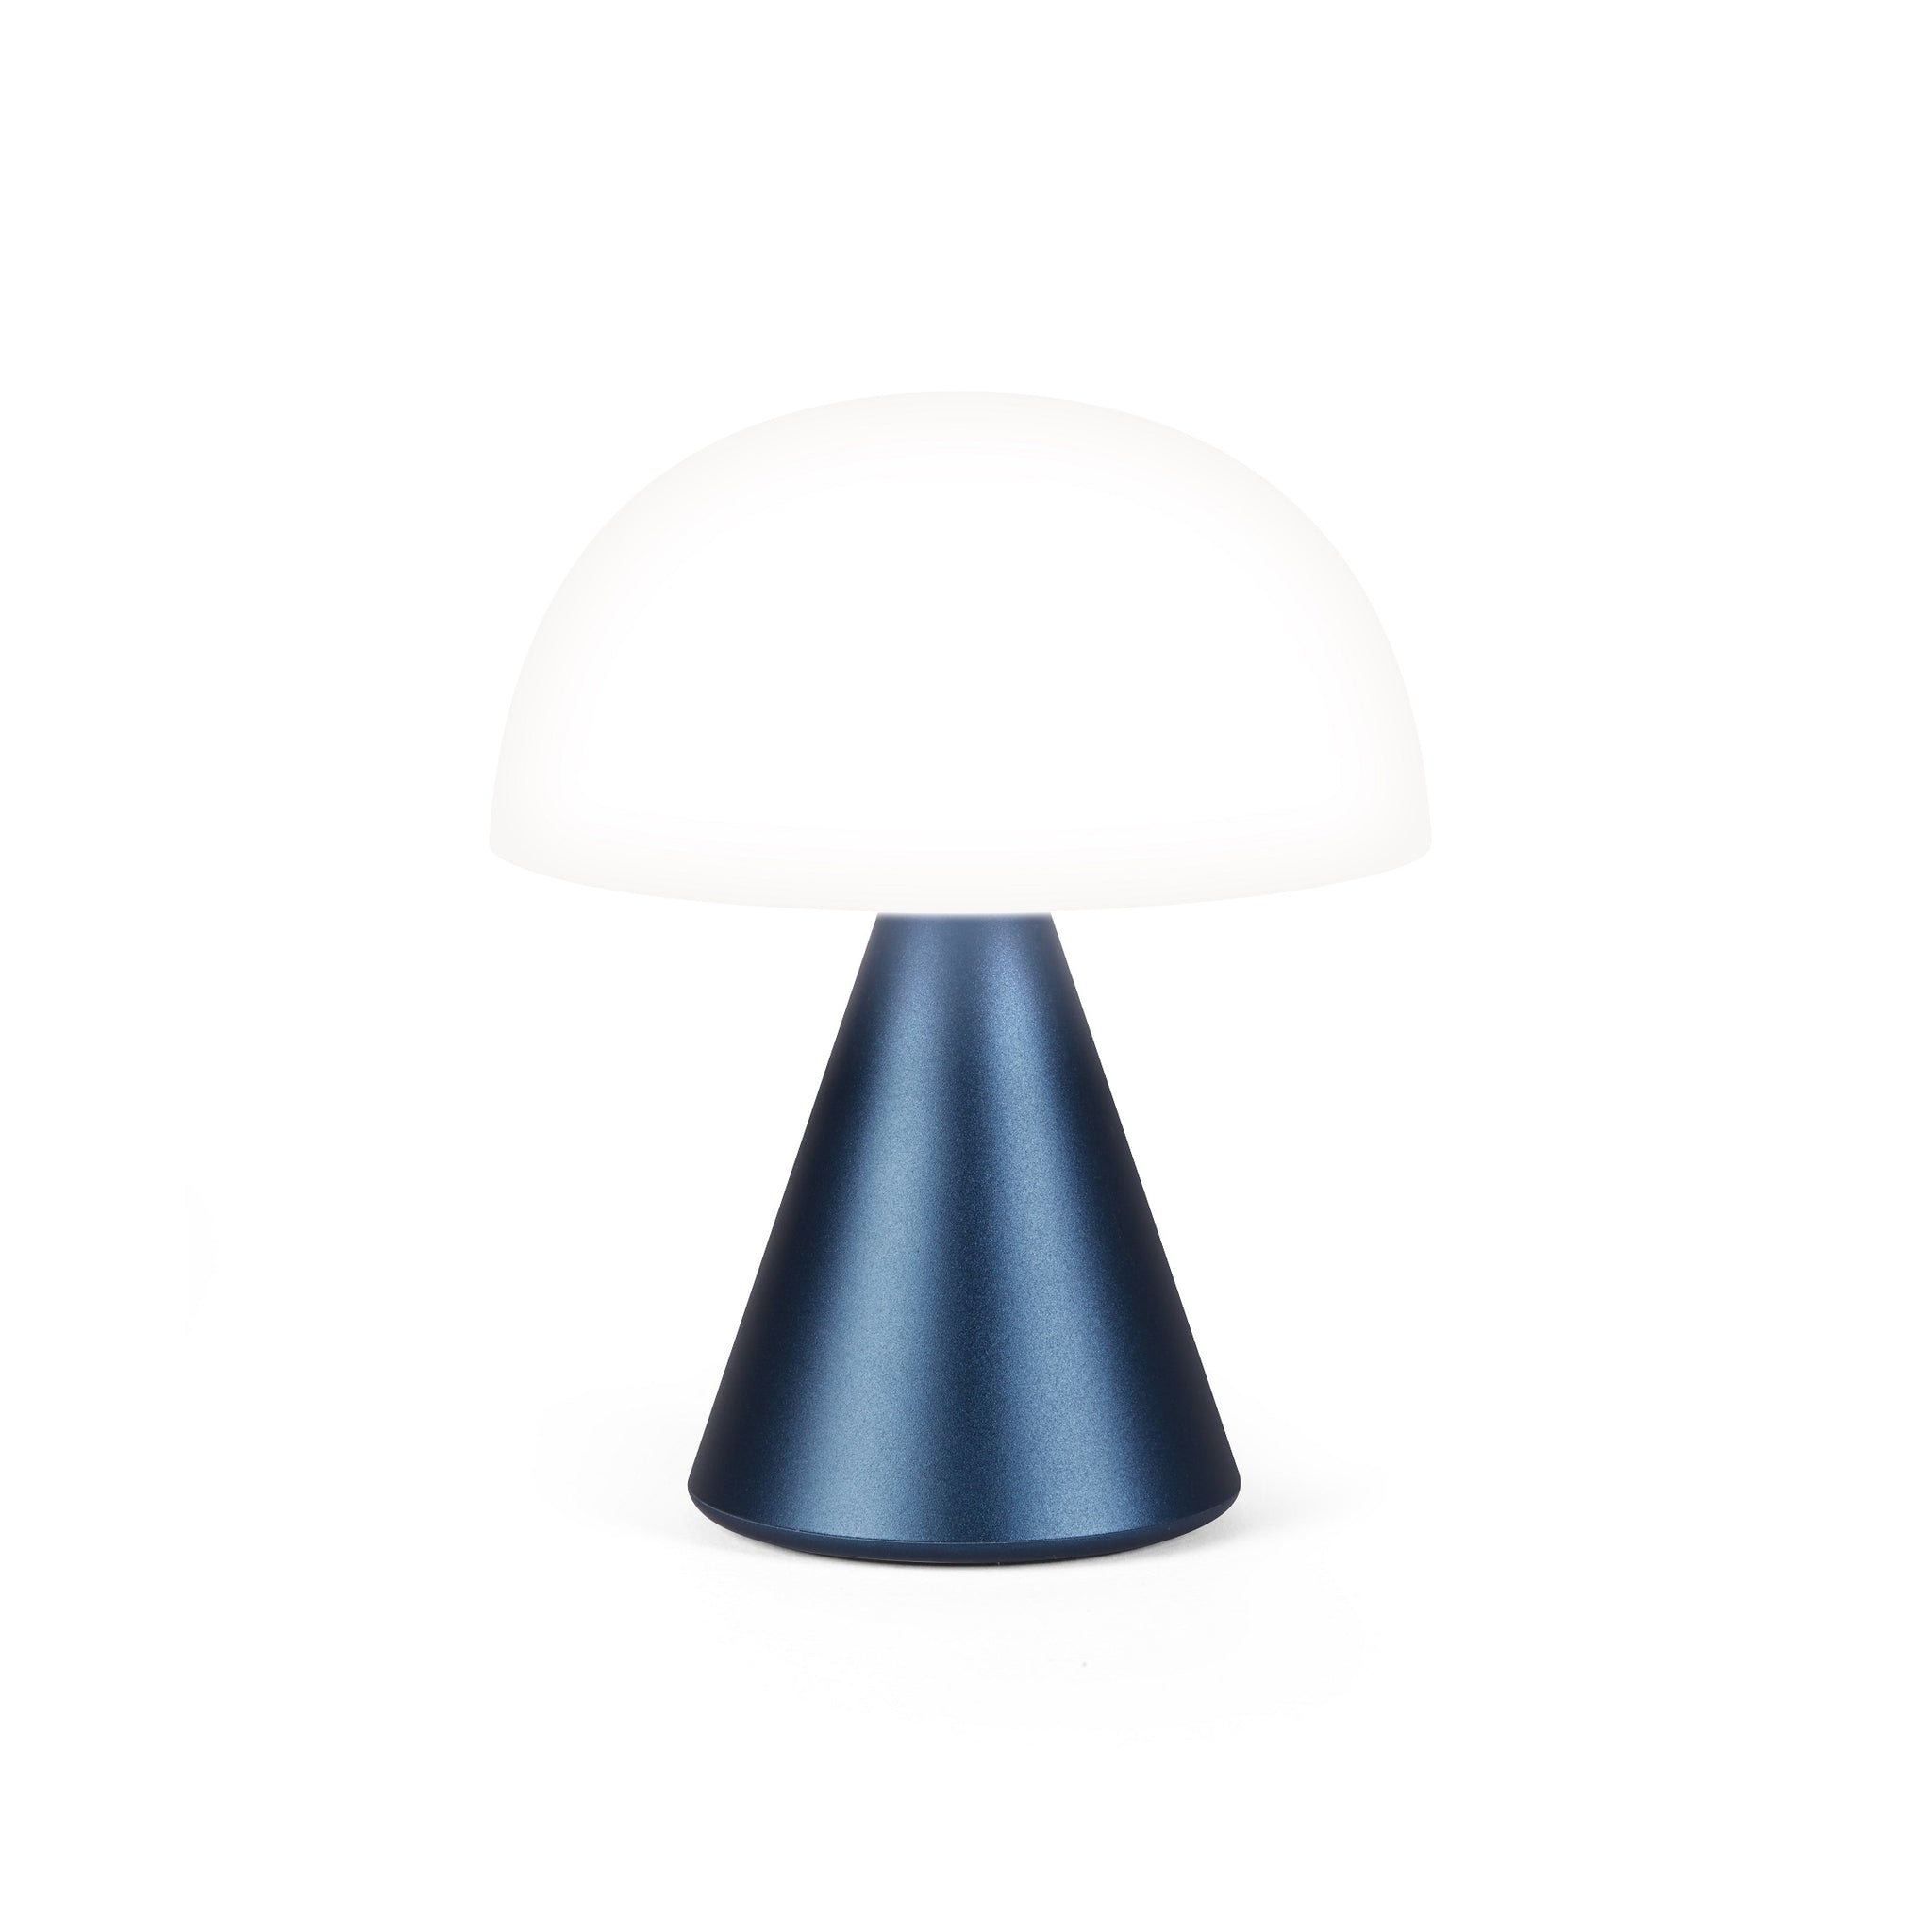 Lexon Mina Medium Donkerblauw│Oplaadbare LED-lamp│art. LH64MDB│wit licht aan met witte achtergrond